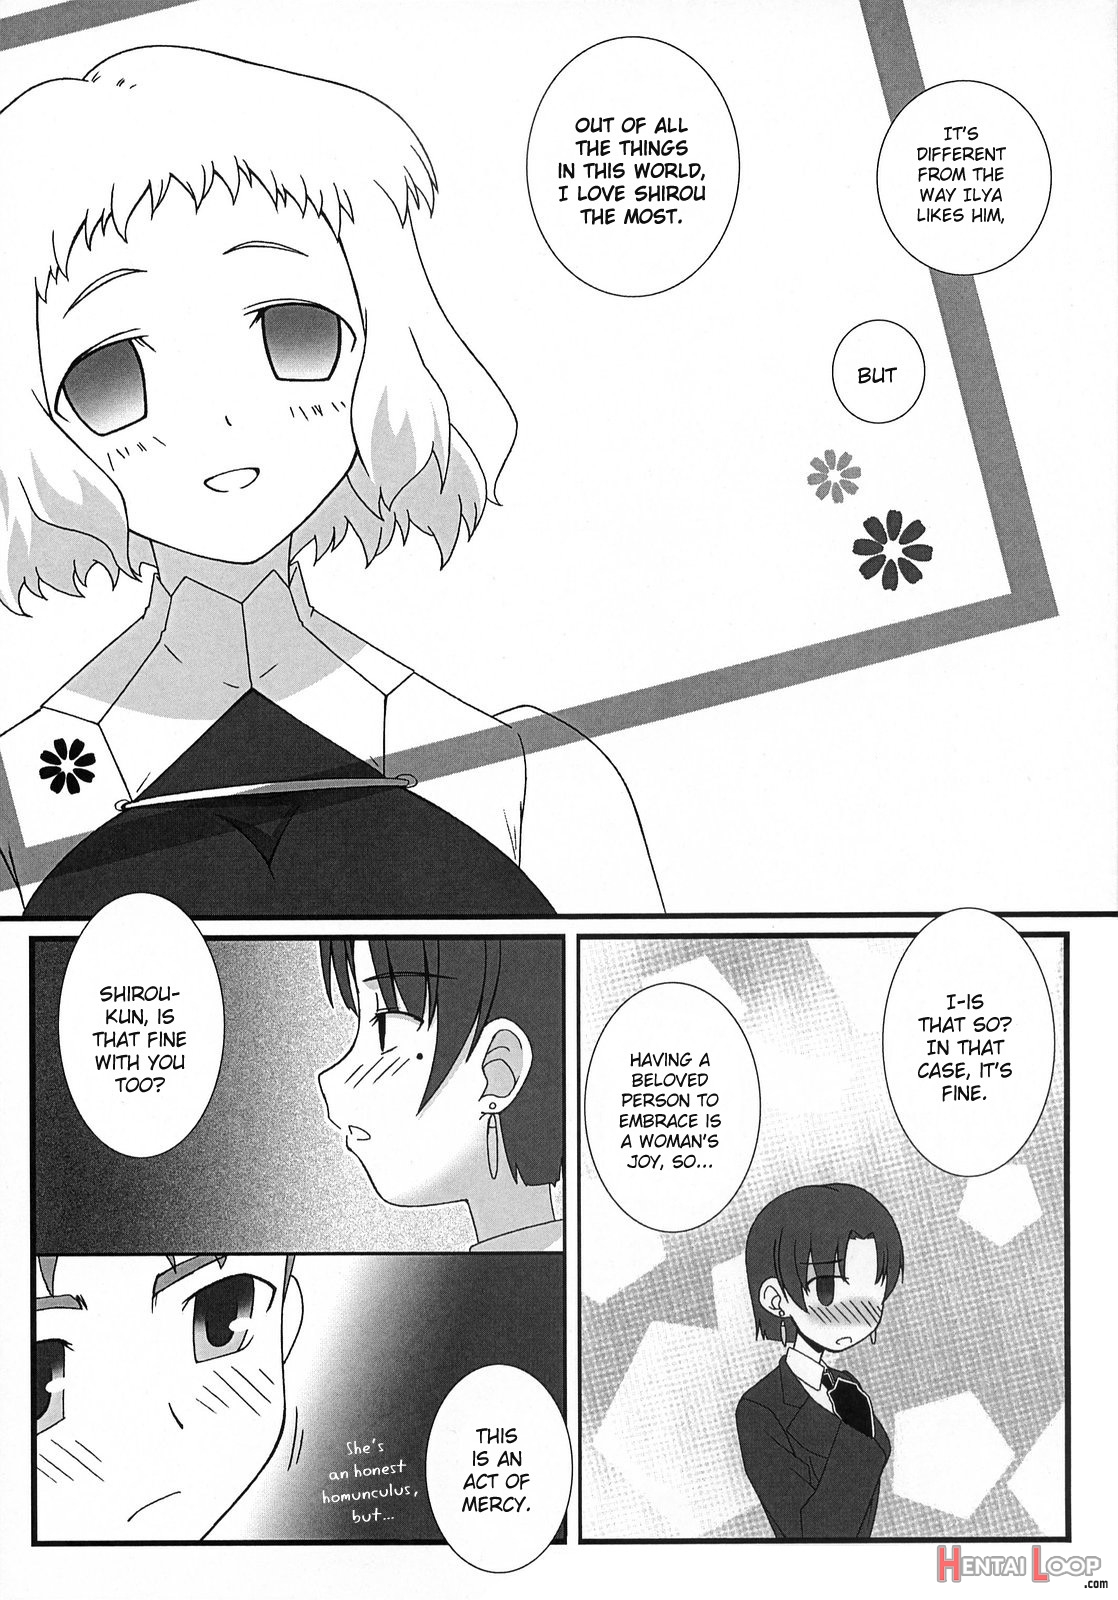 Fate/stay Night - Yappari Rizeitto page 7